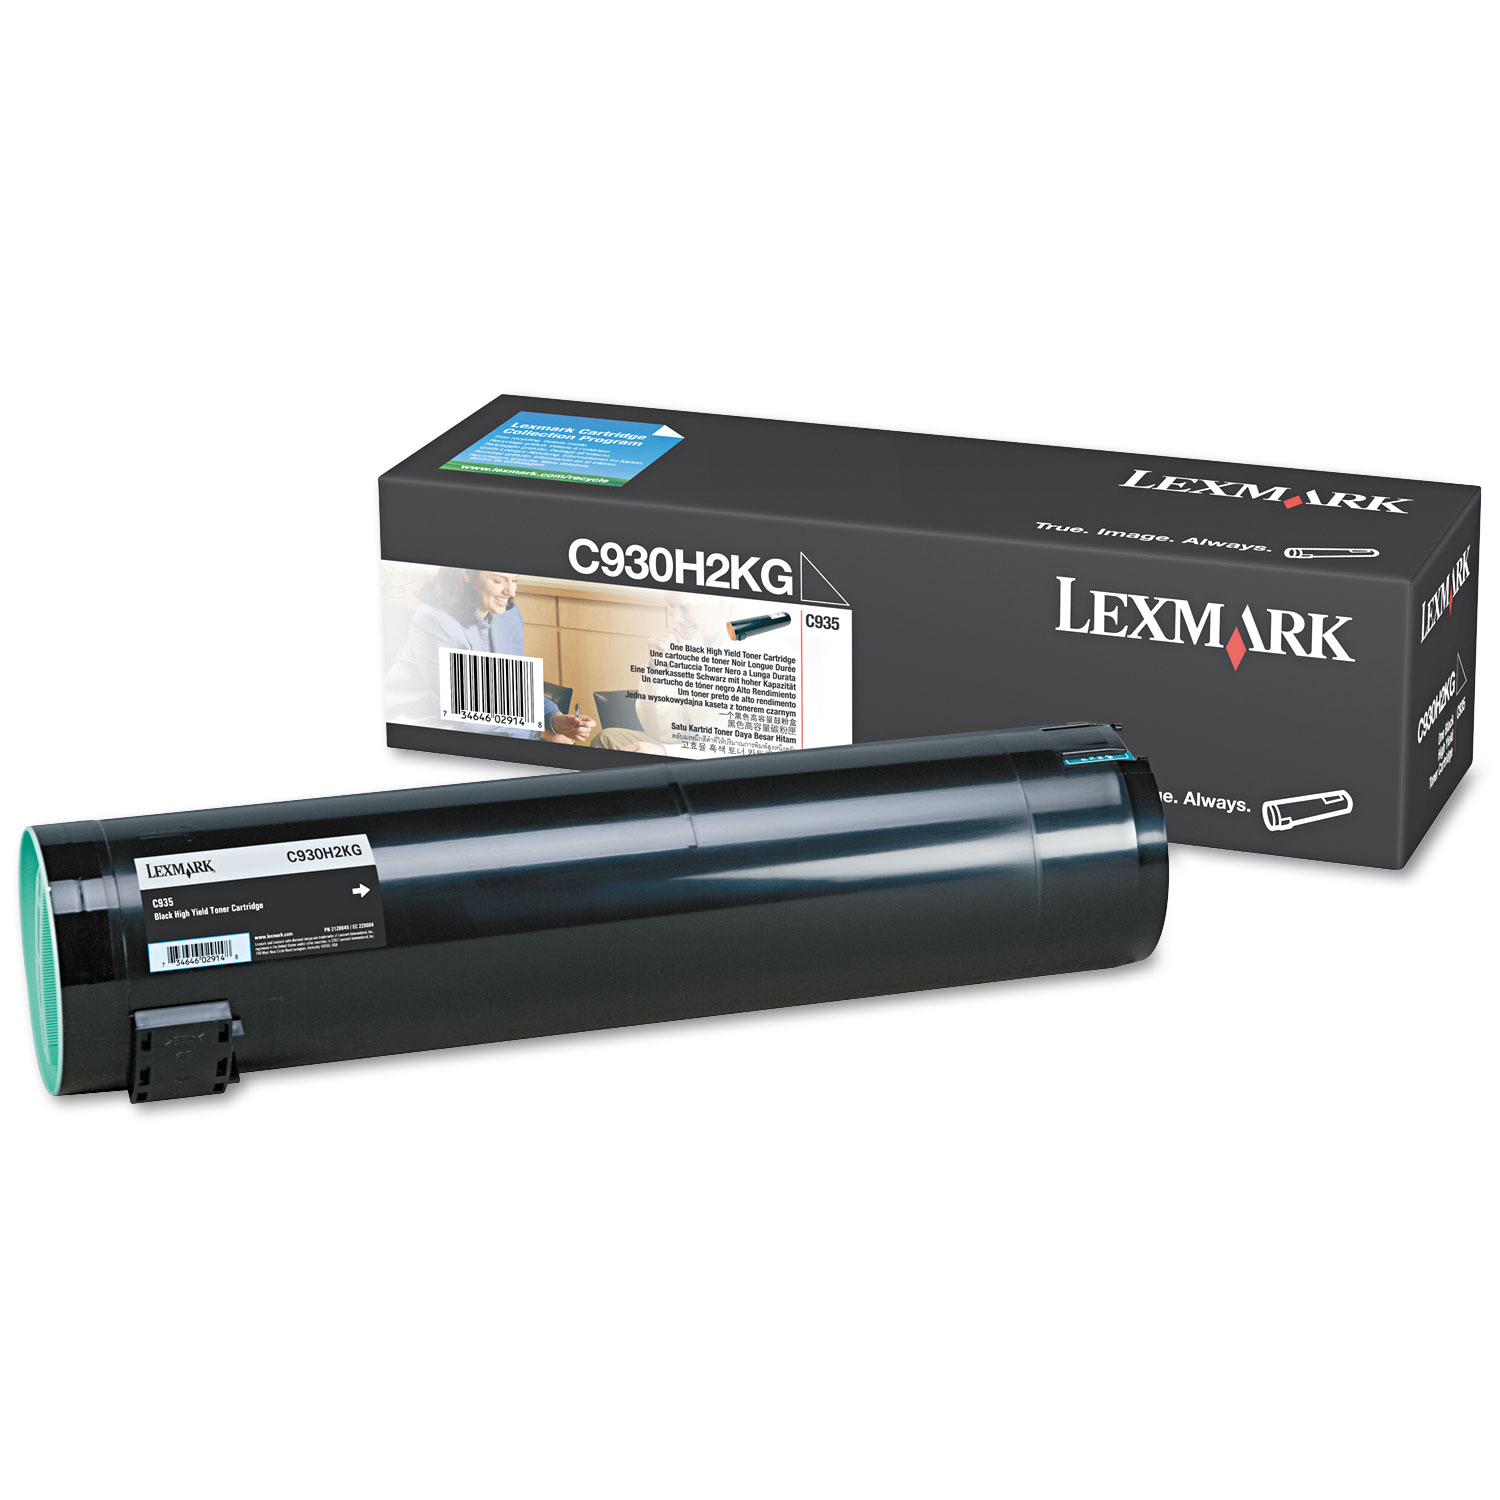  Lexmark C930H2KG C930H2KG High-Yield Toner, 38000 Page-Yield, Black (LEXC930H2KG) 